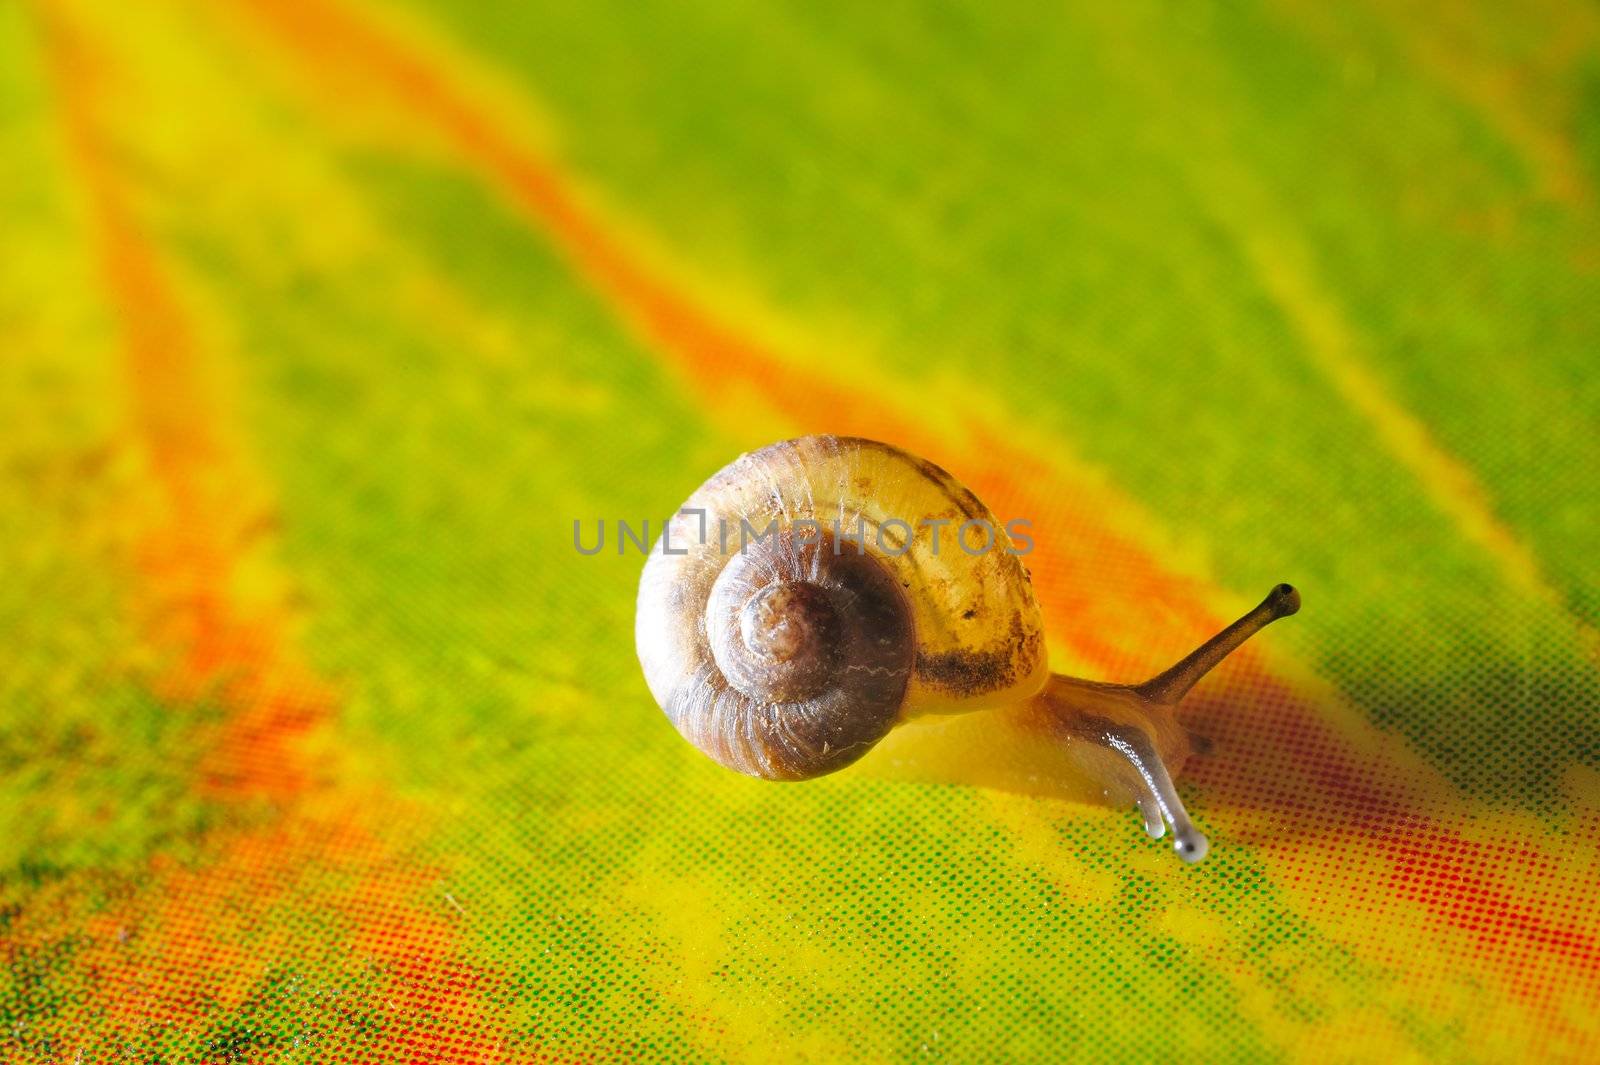 Macro shot of a snail